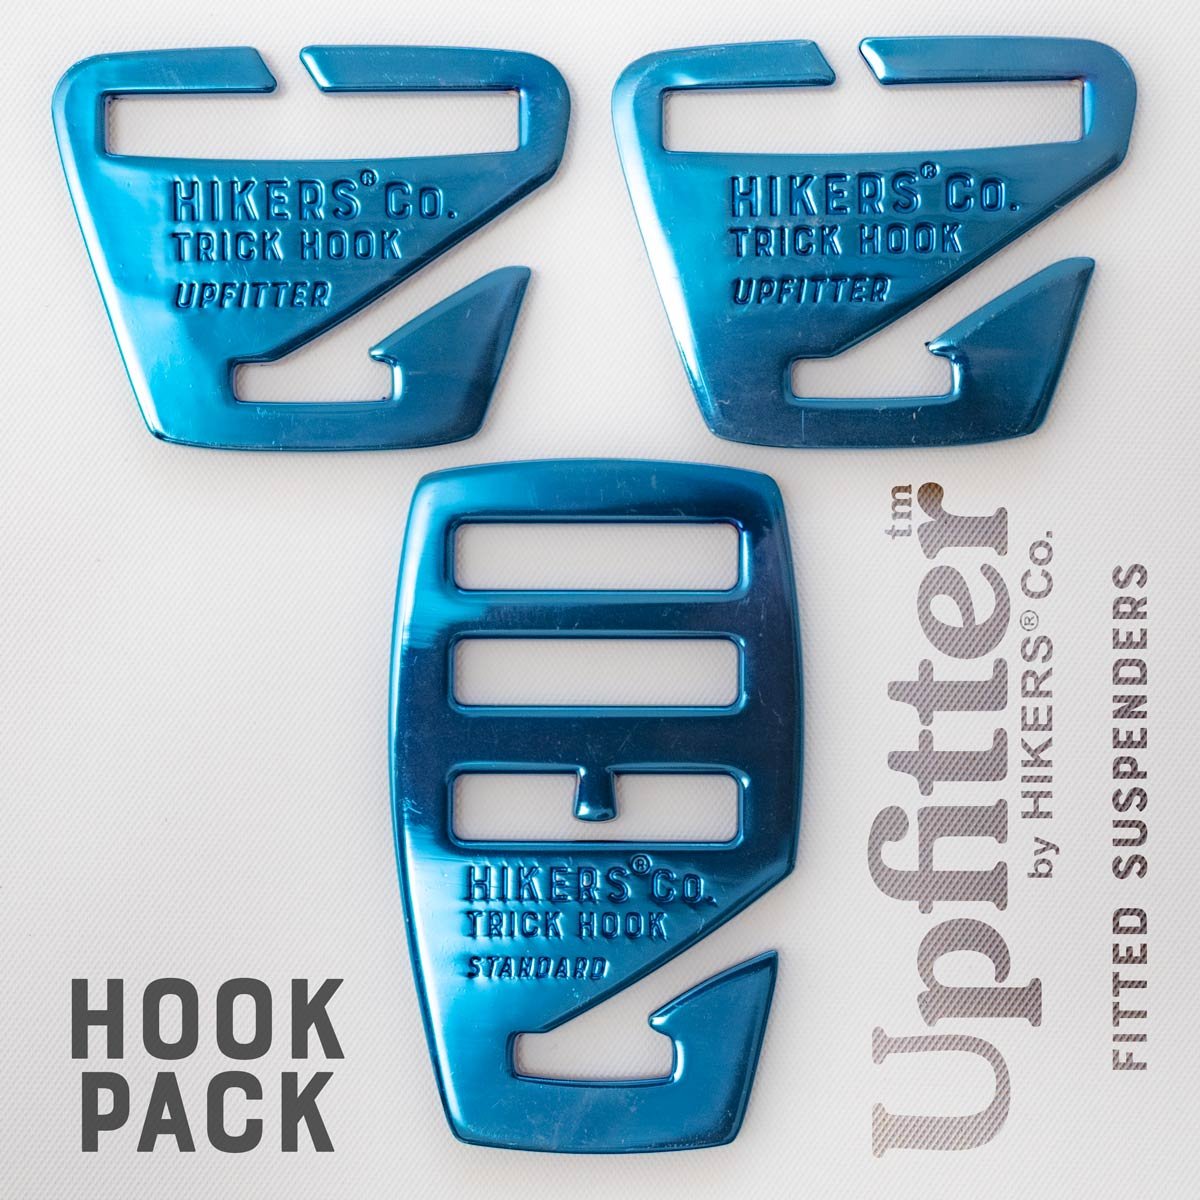 Upfitter™ Suspenders Standard Metal Hook Packs - now available in Electric Blue